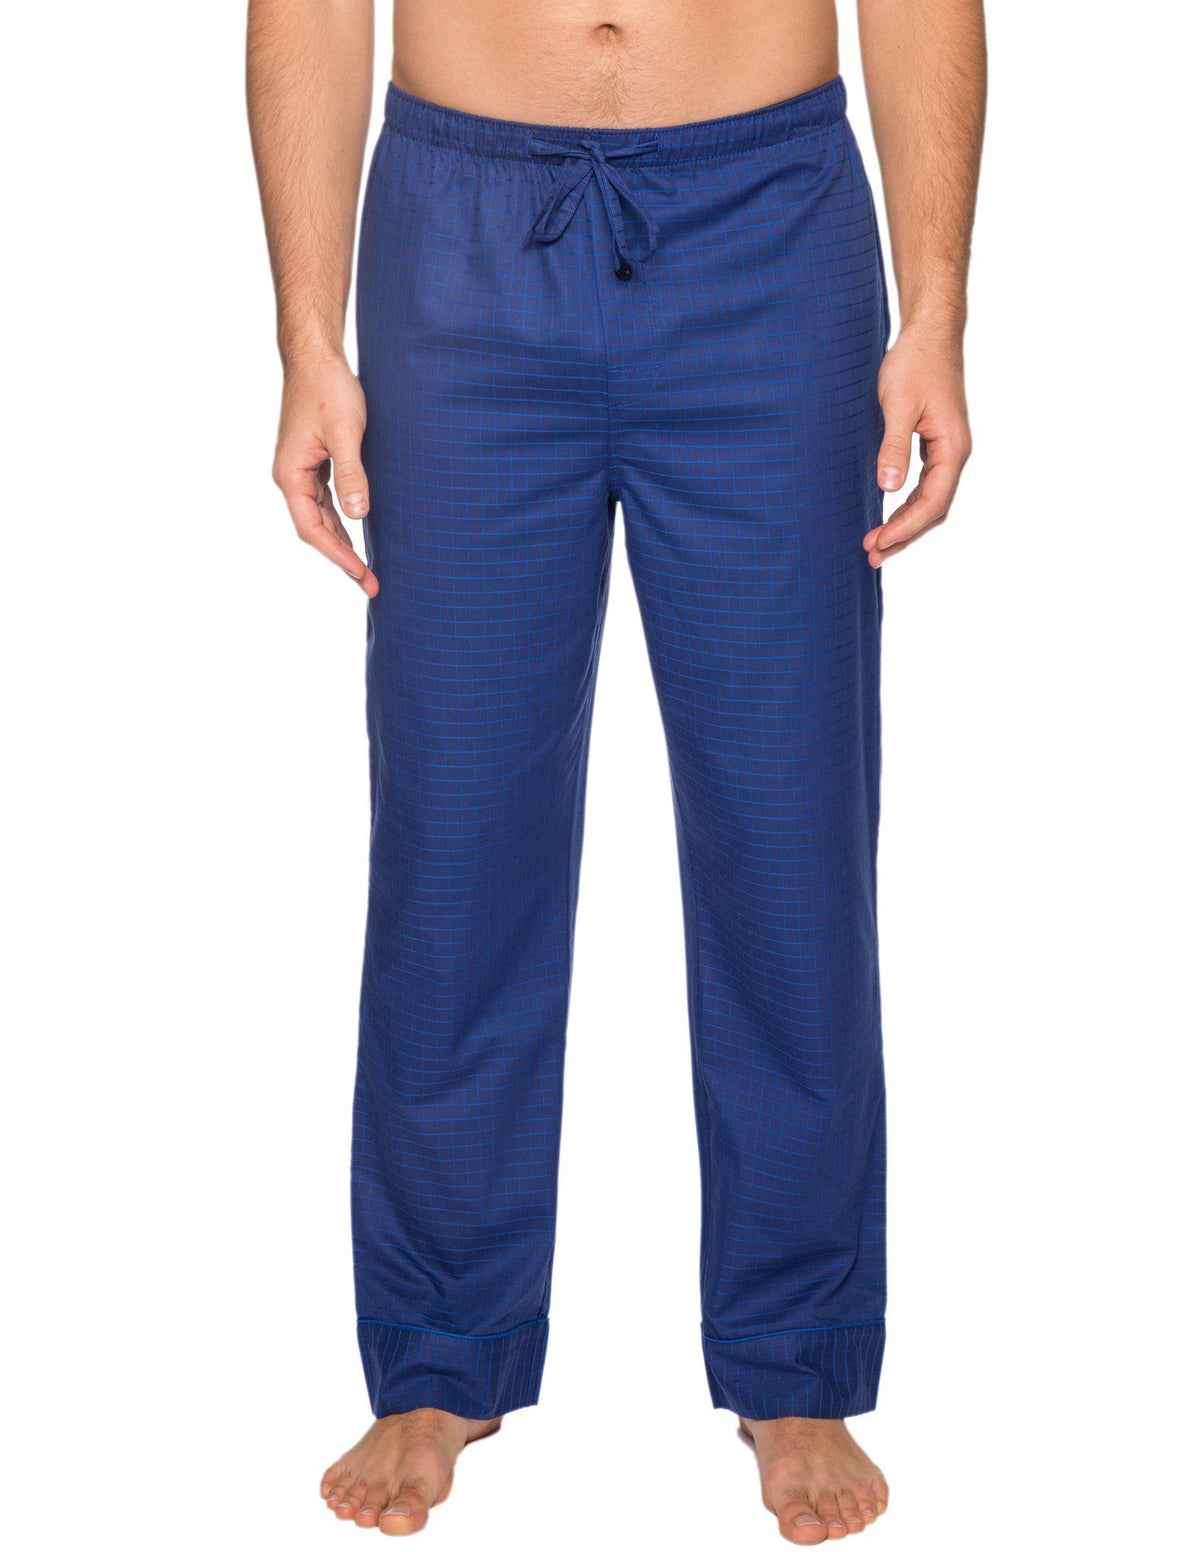 Men's 100% Cotton Comfort-Fit Sleep/Lounge Pants - Windowpane Checks Navy/Blue